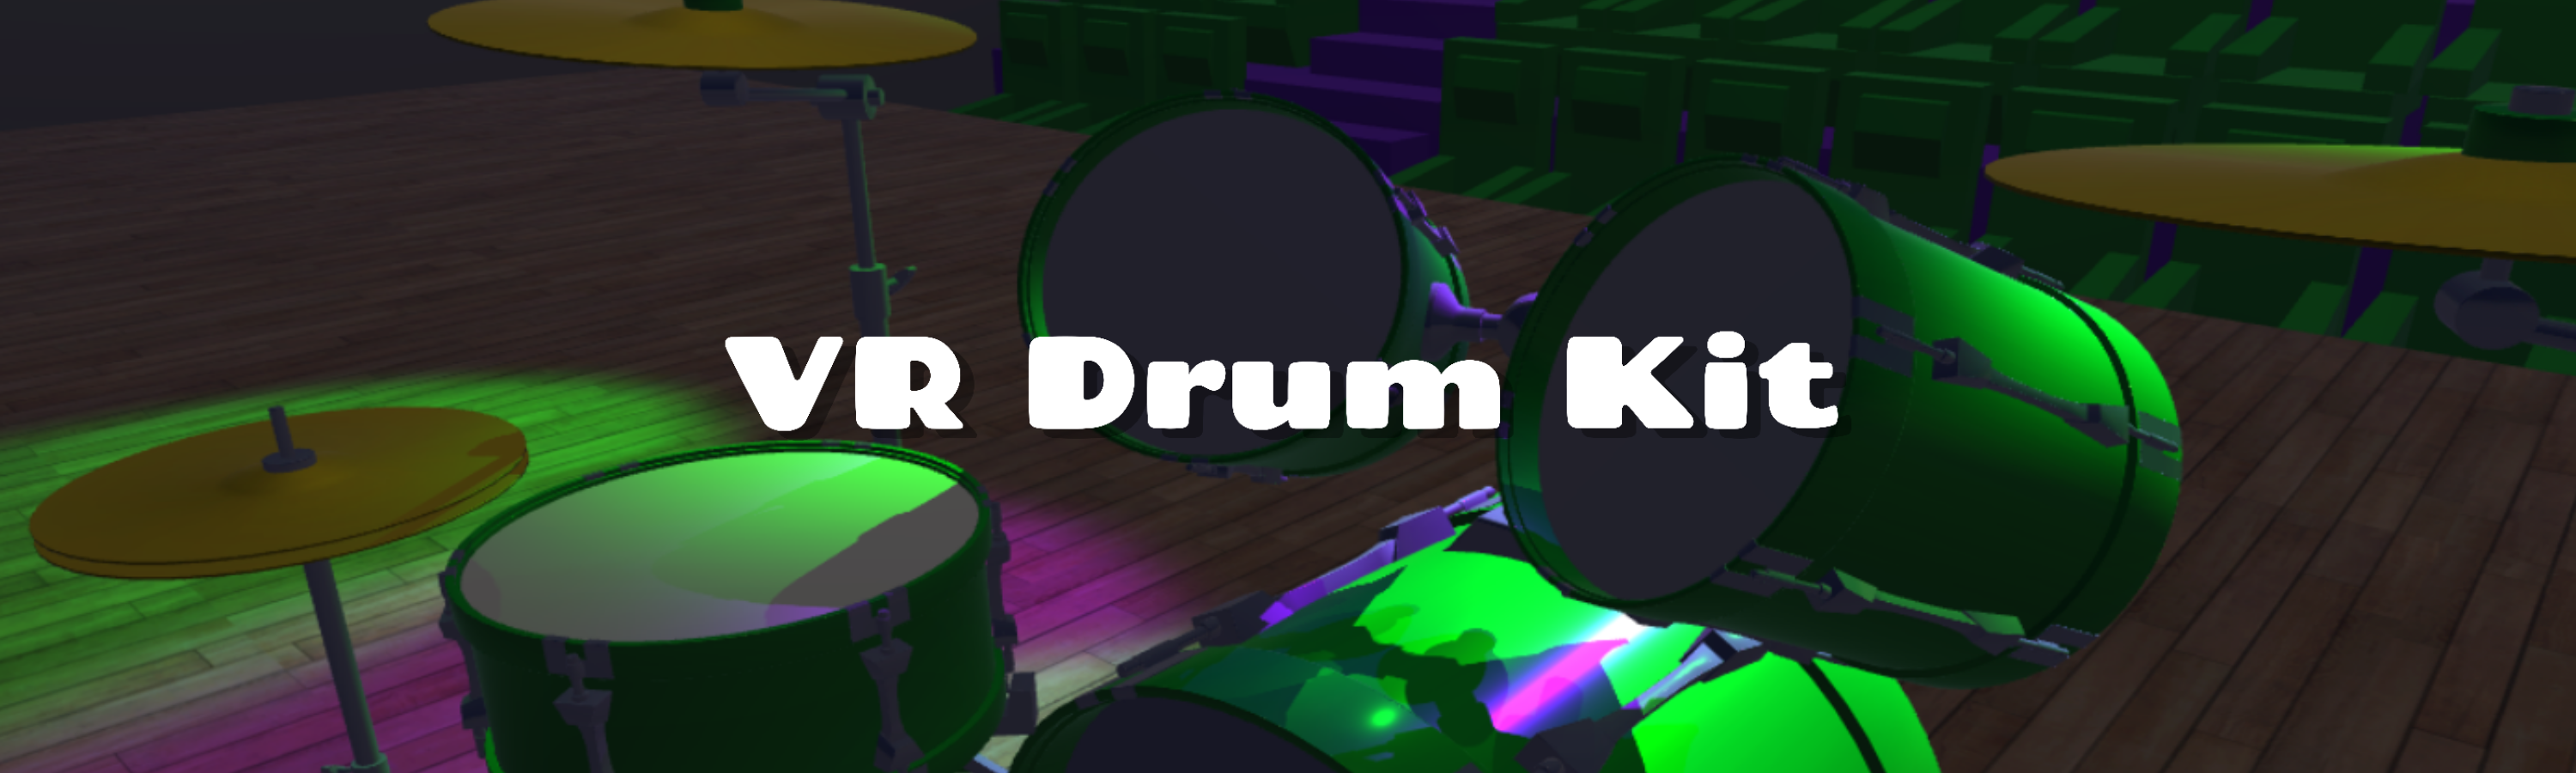 VR Drum Kit